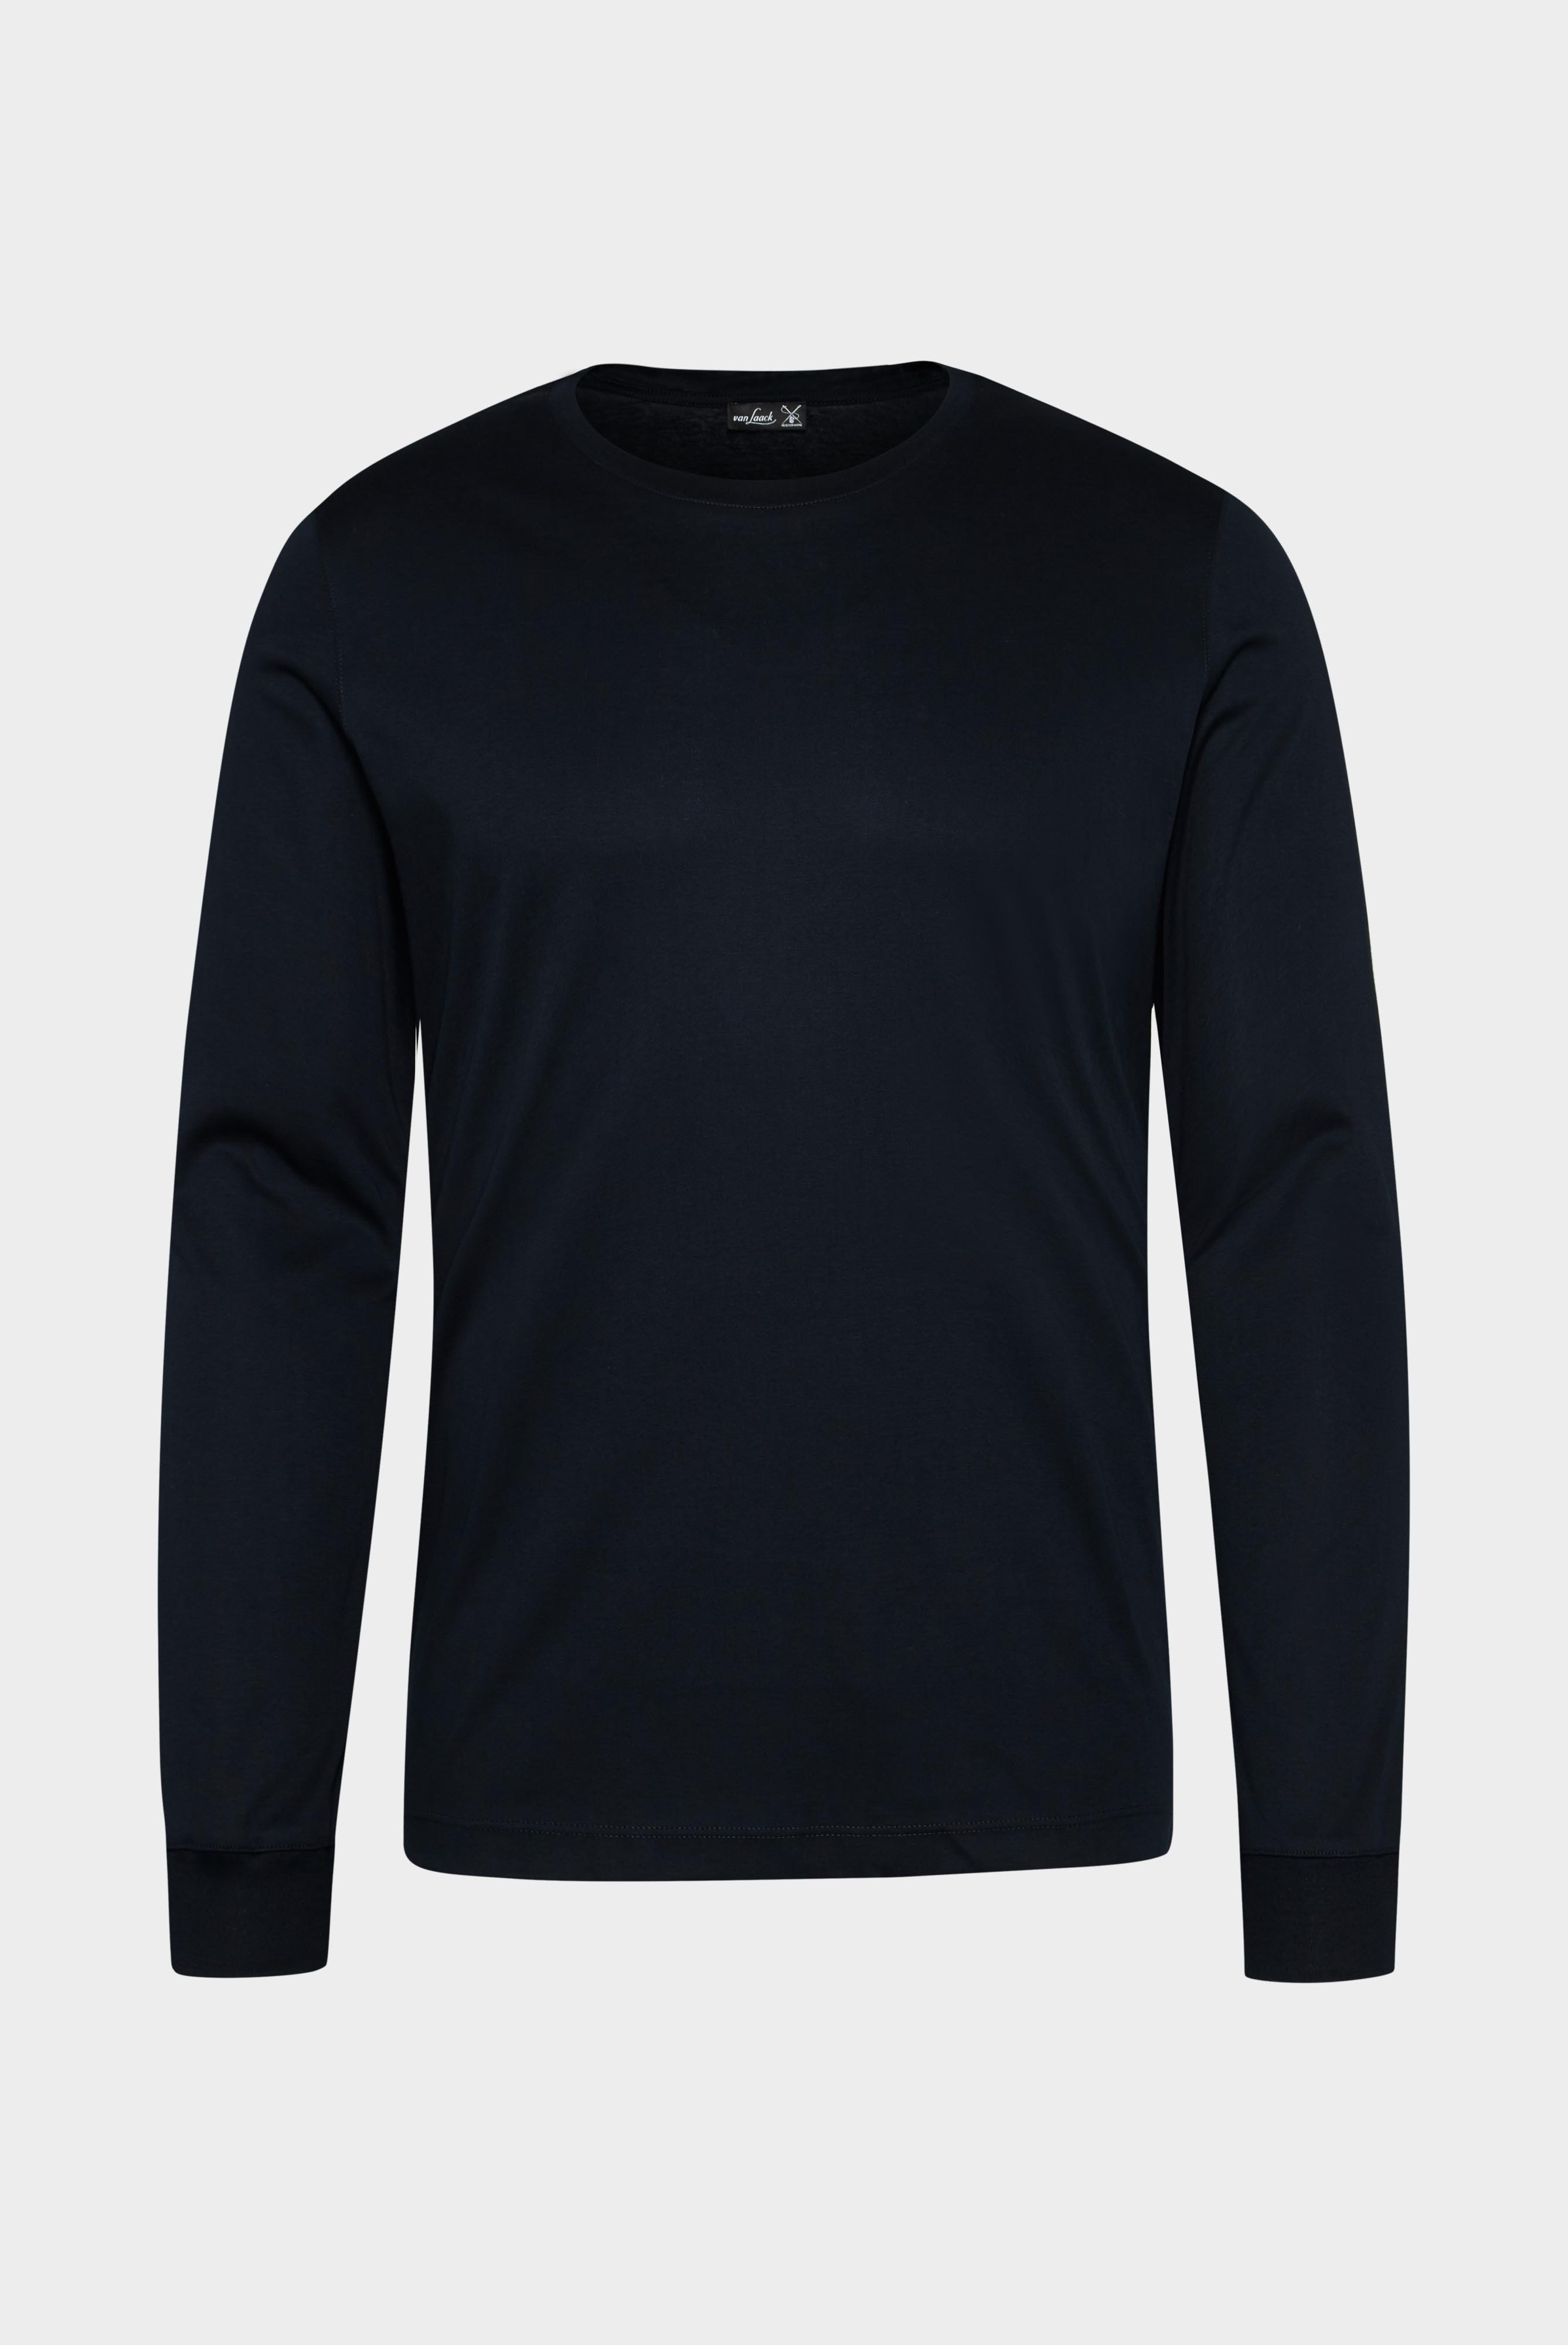 T-Shirts+Longsleeve Swiss Cotton Jersey Crew Neck T-Shirt+20.1718.UX.180031.790.L